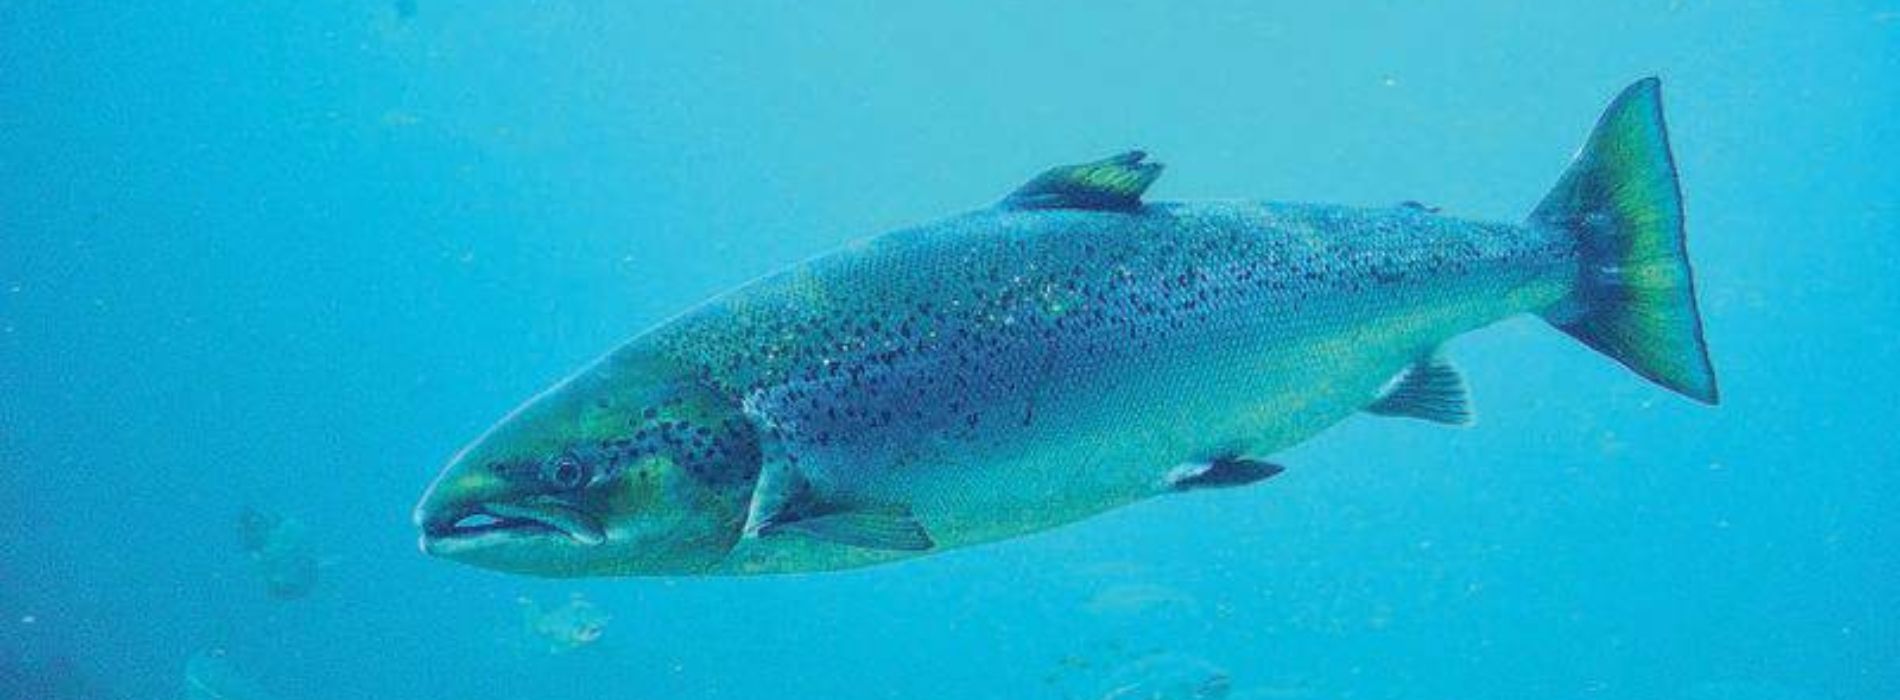 atlantic-salmon-biography